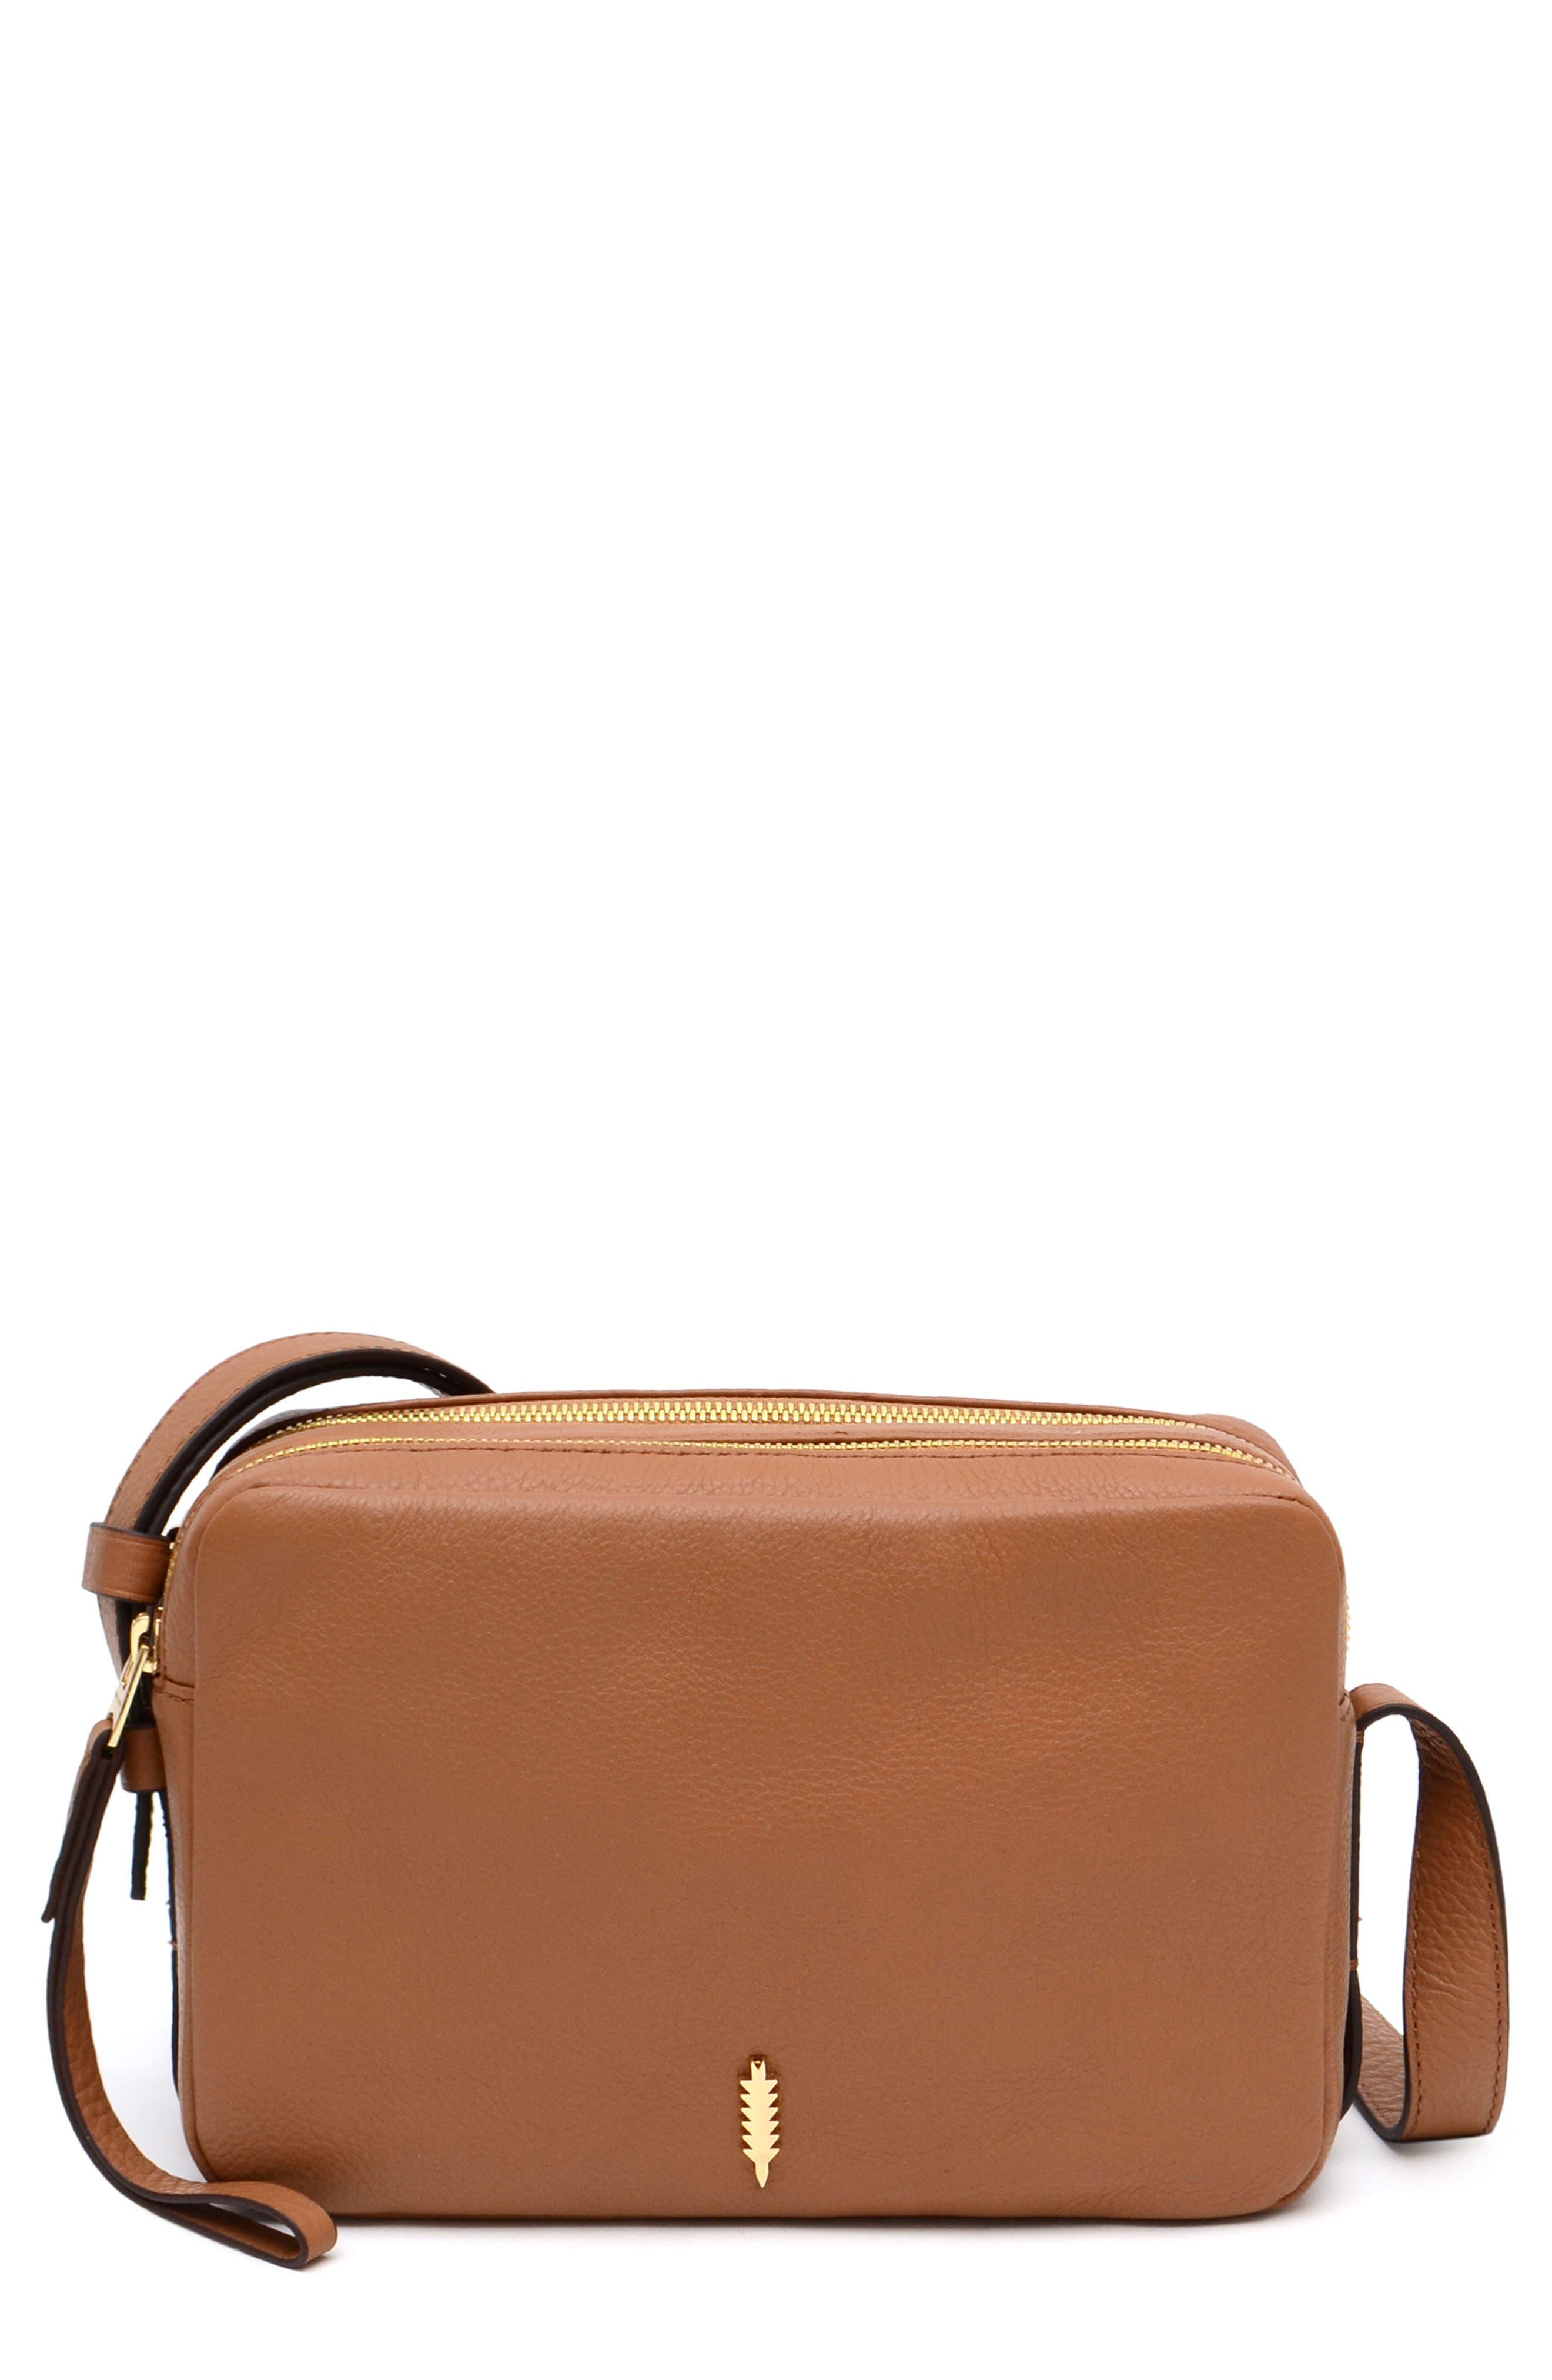 NWT Tillys Jansport Insulated Lunch Bag/Box Zipper Close Outside Pocket TS3  | eBay